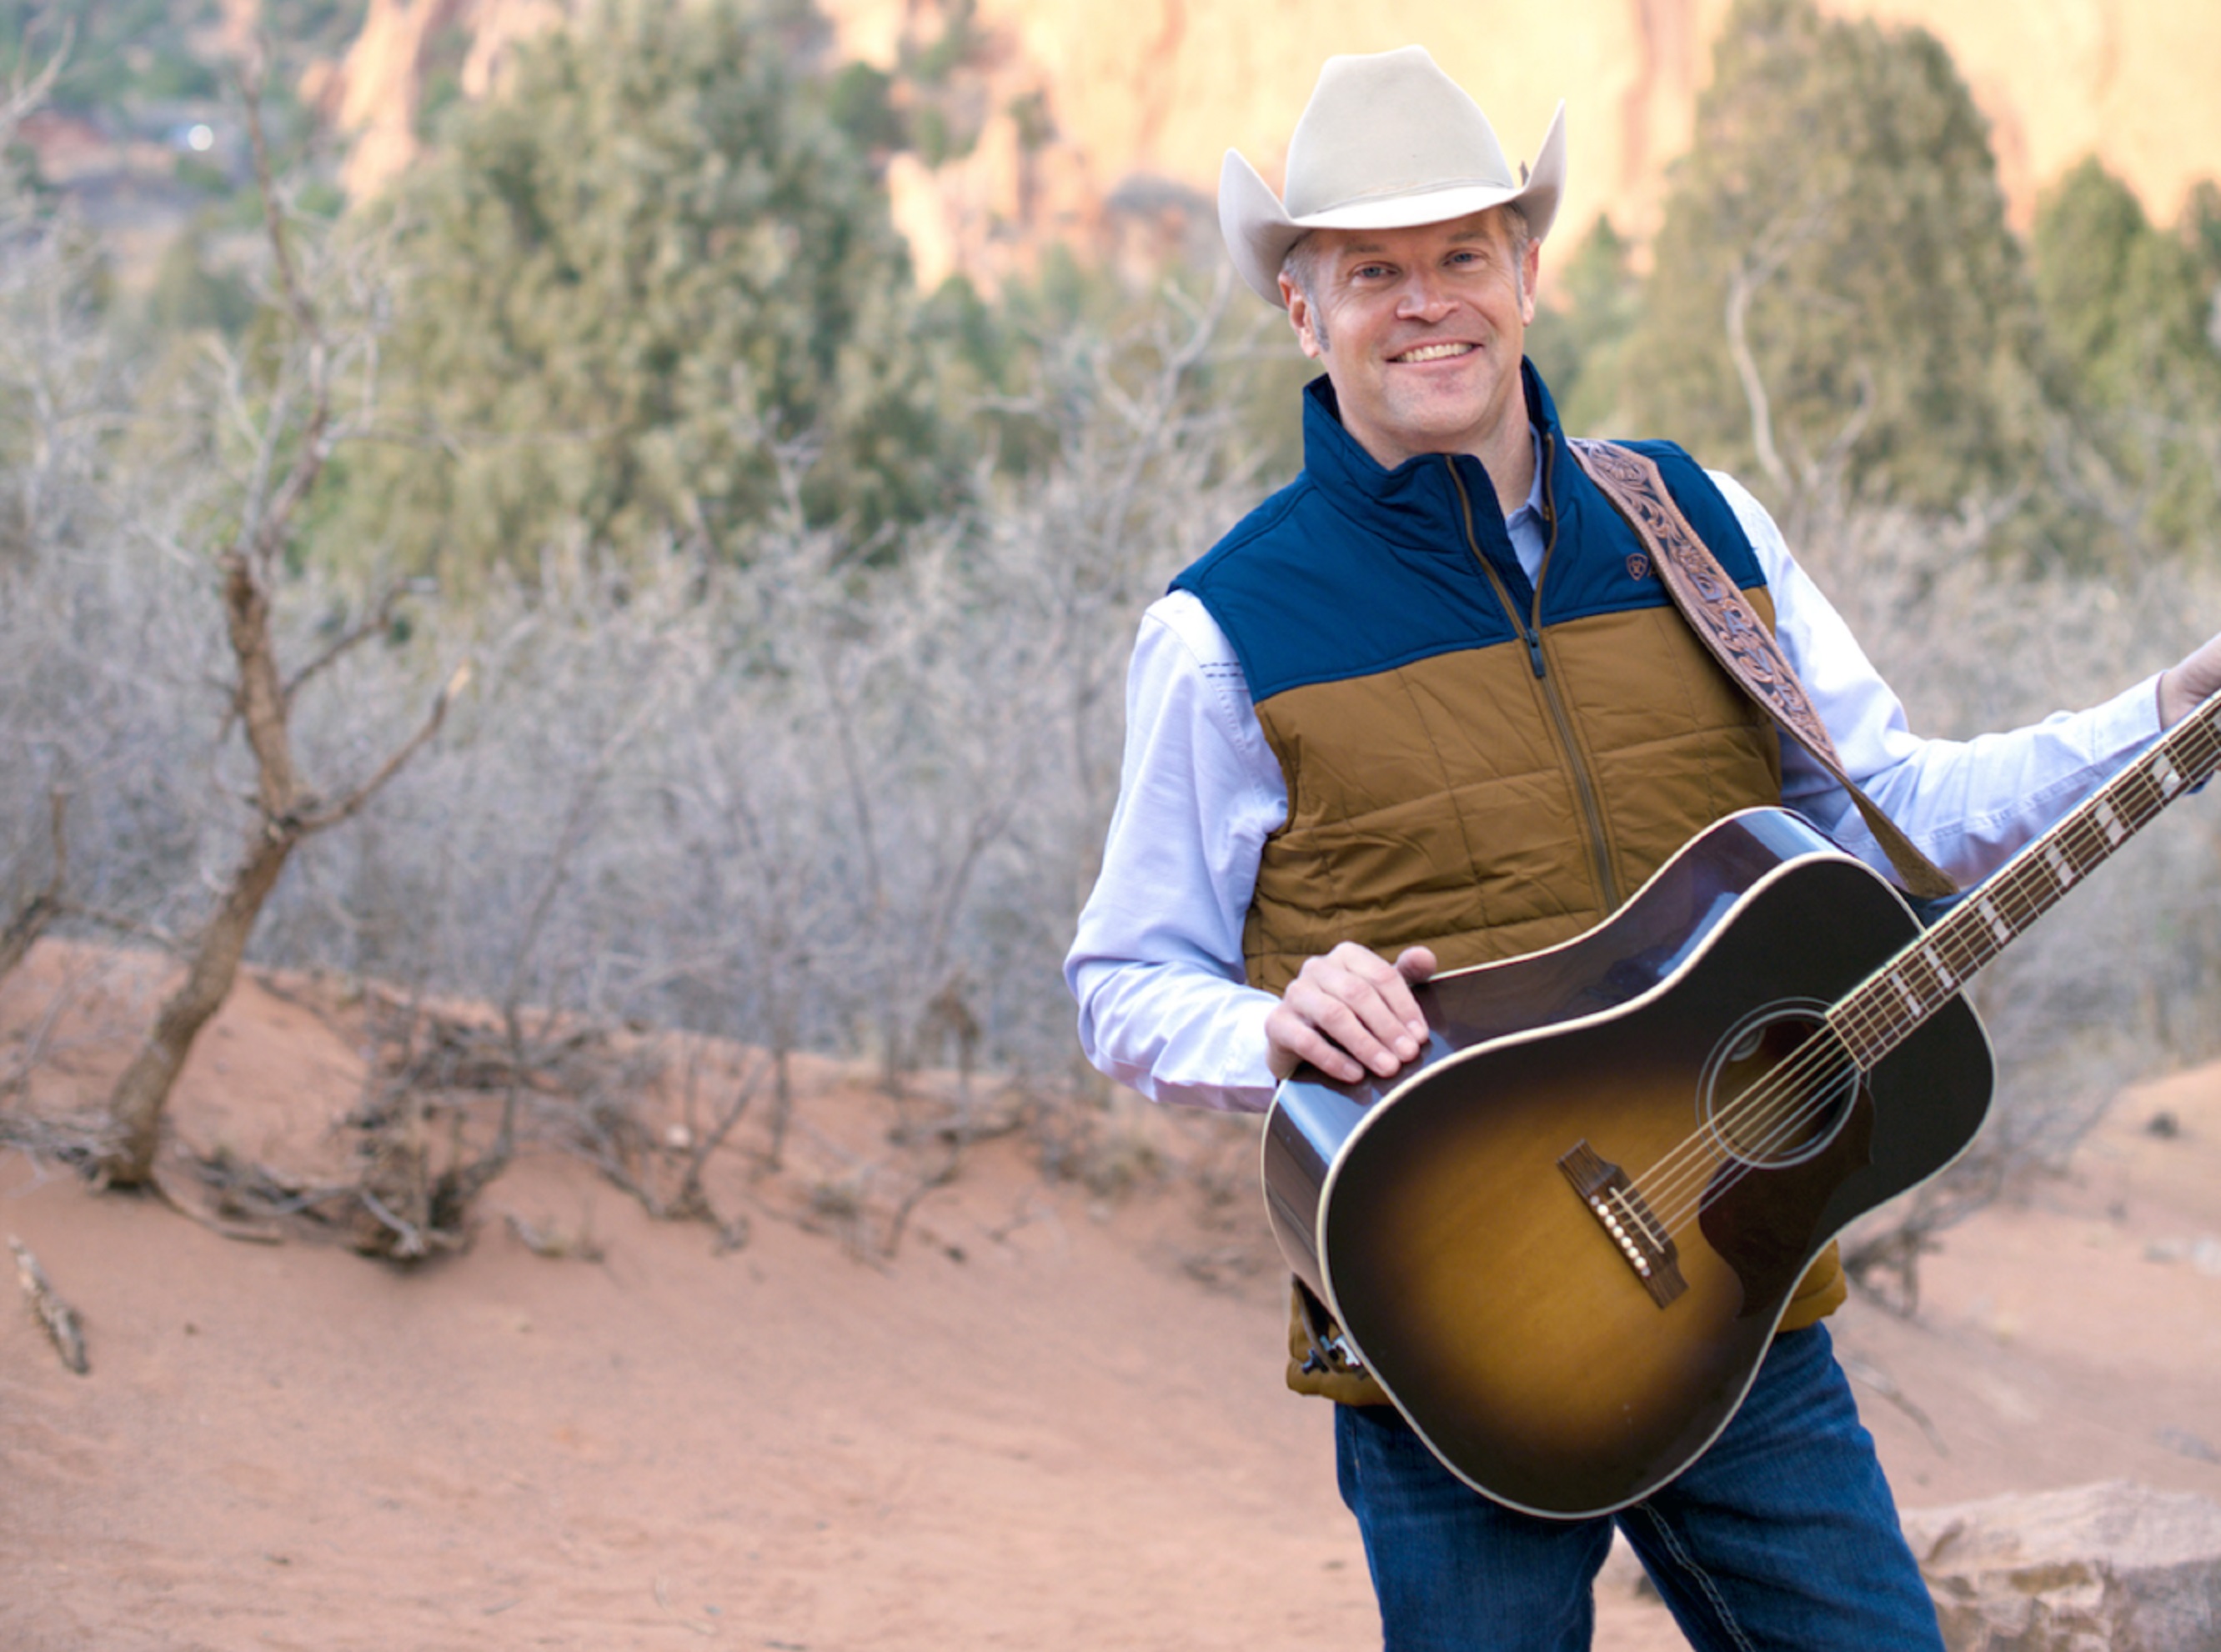 Colorado-based country honky-tonk musician Cowboy Dave announces new LP due April 14